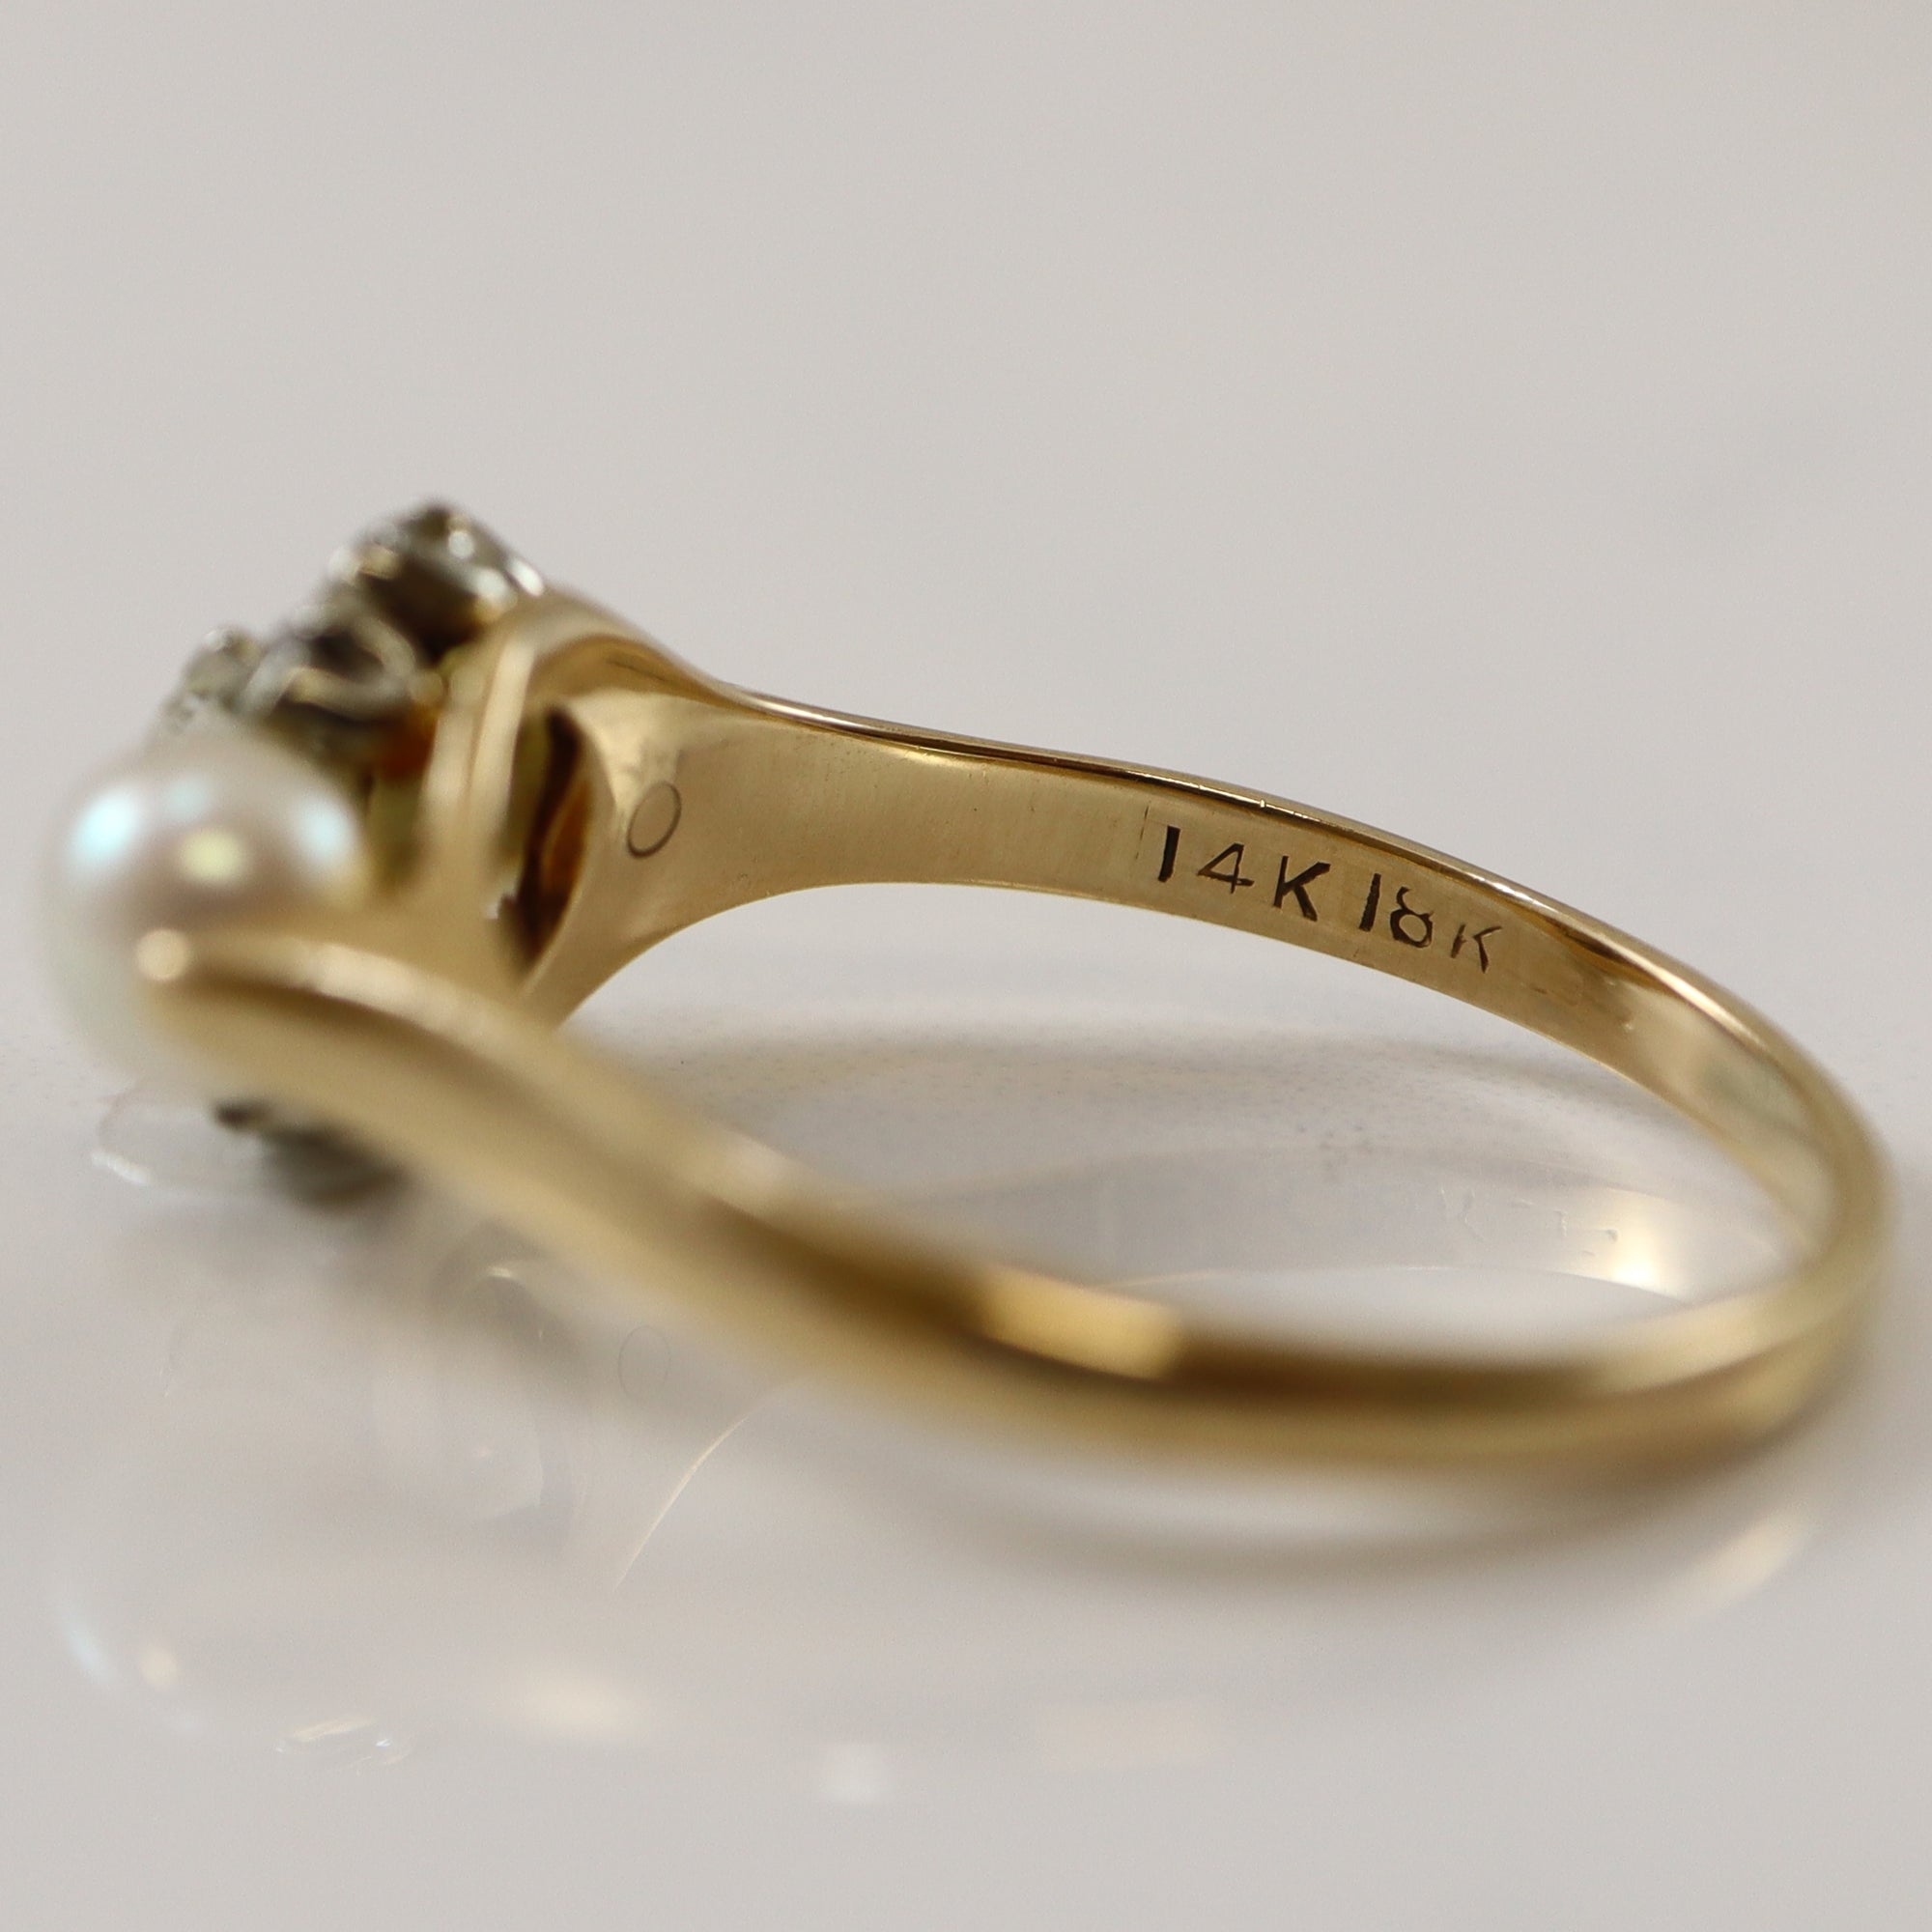 1940s Pearl & Diamond Ring | 2.80ctw, 0.23ctw | SZ 11 |